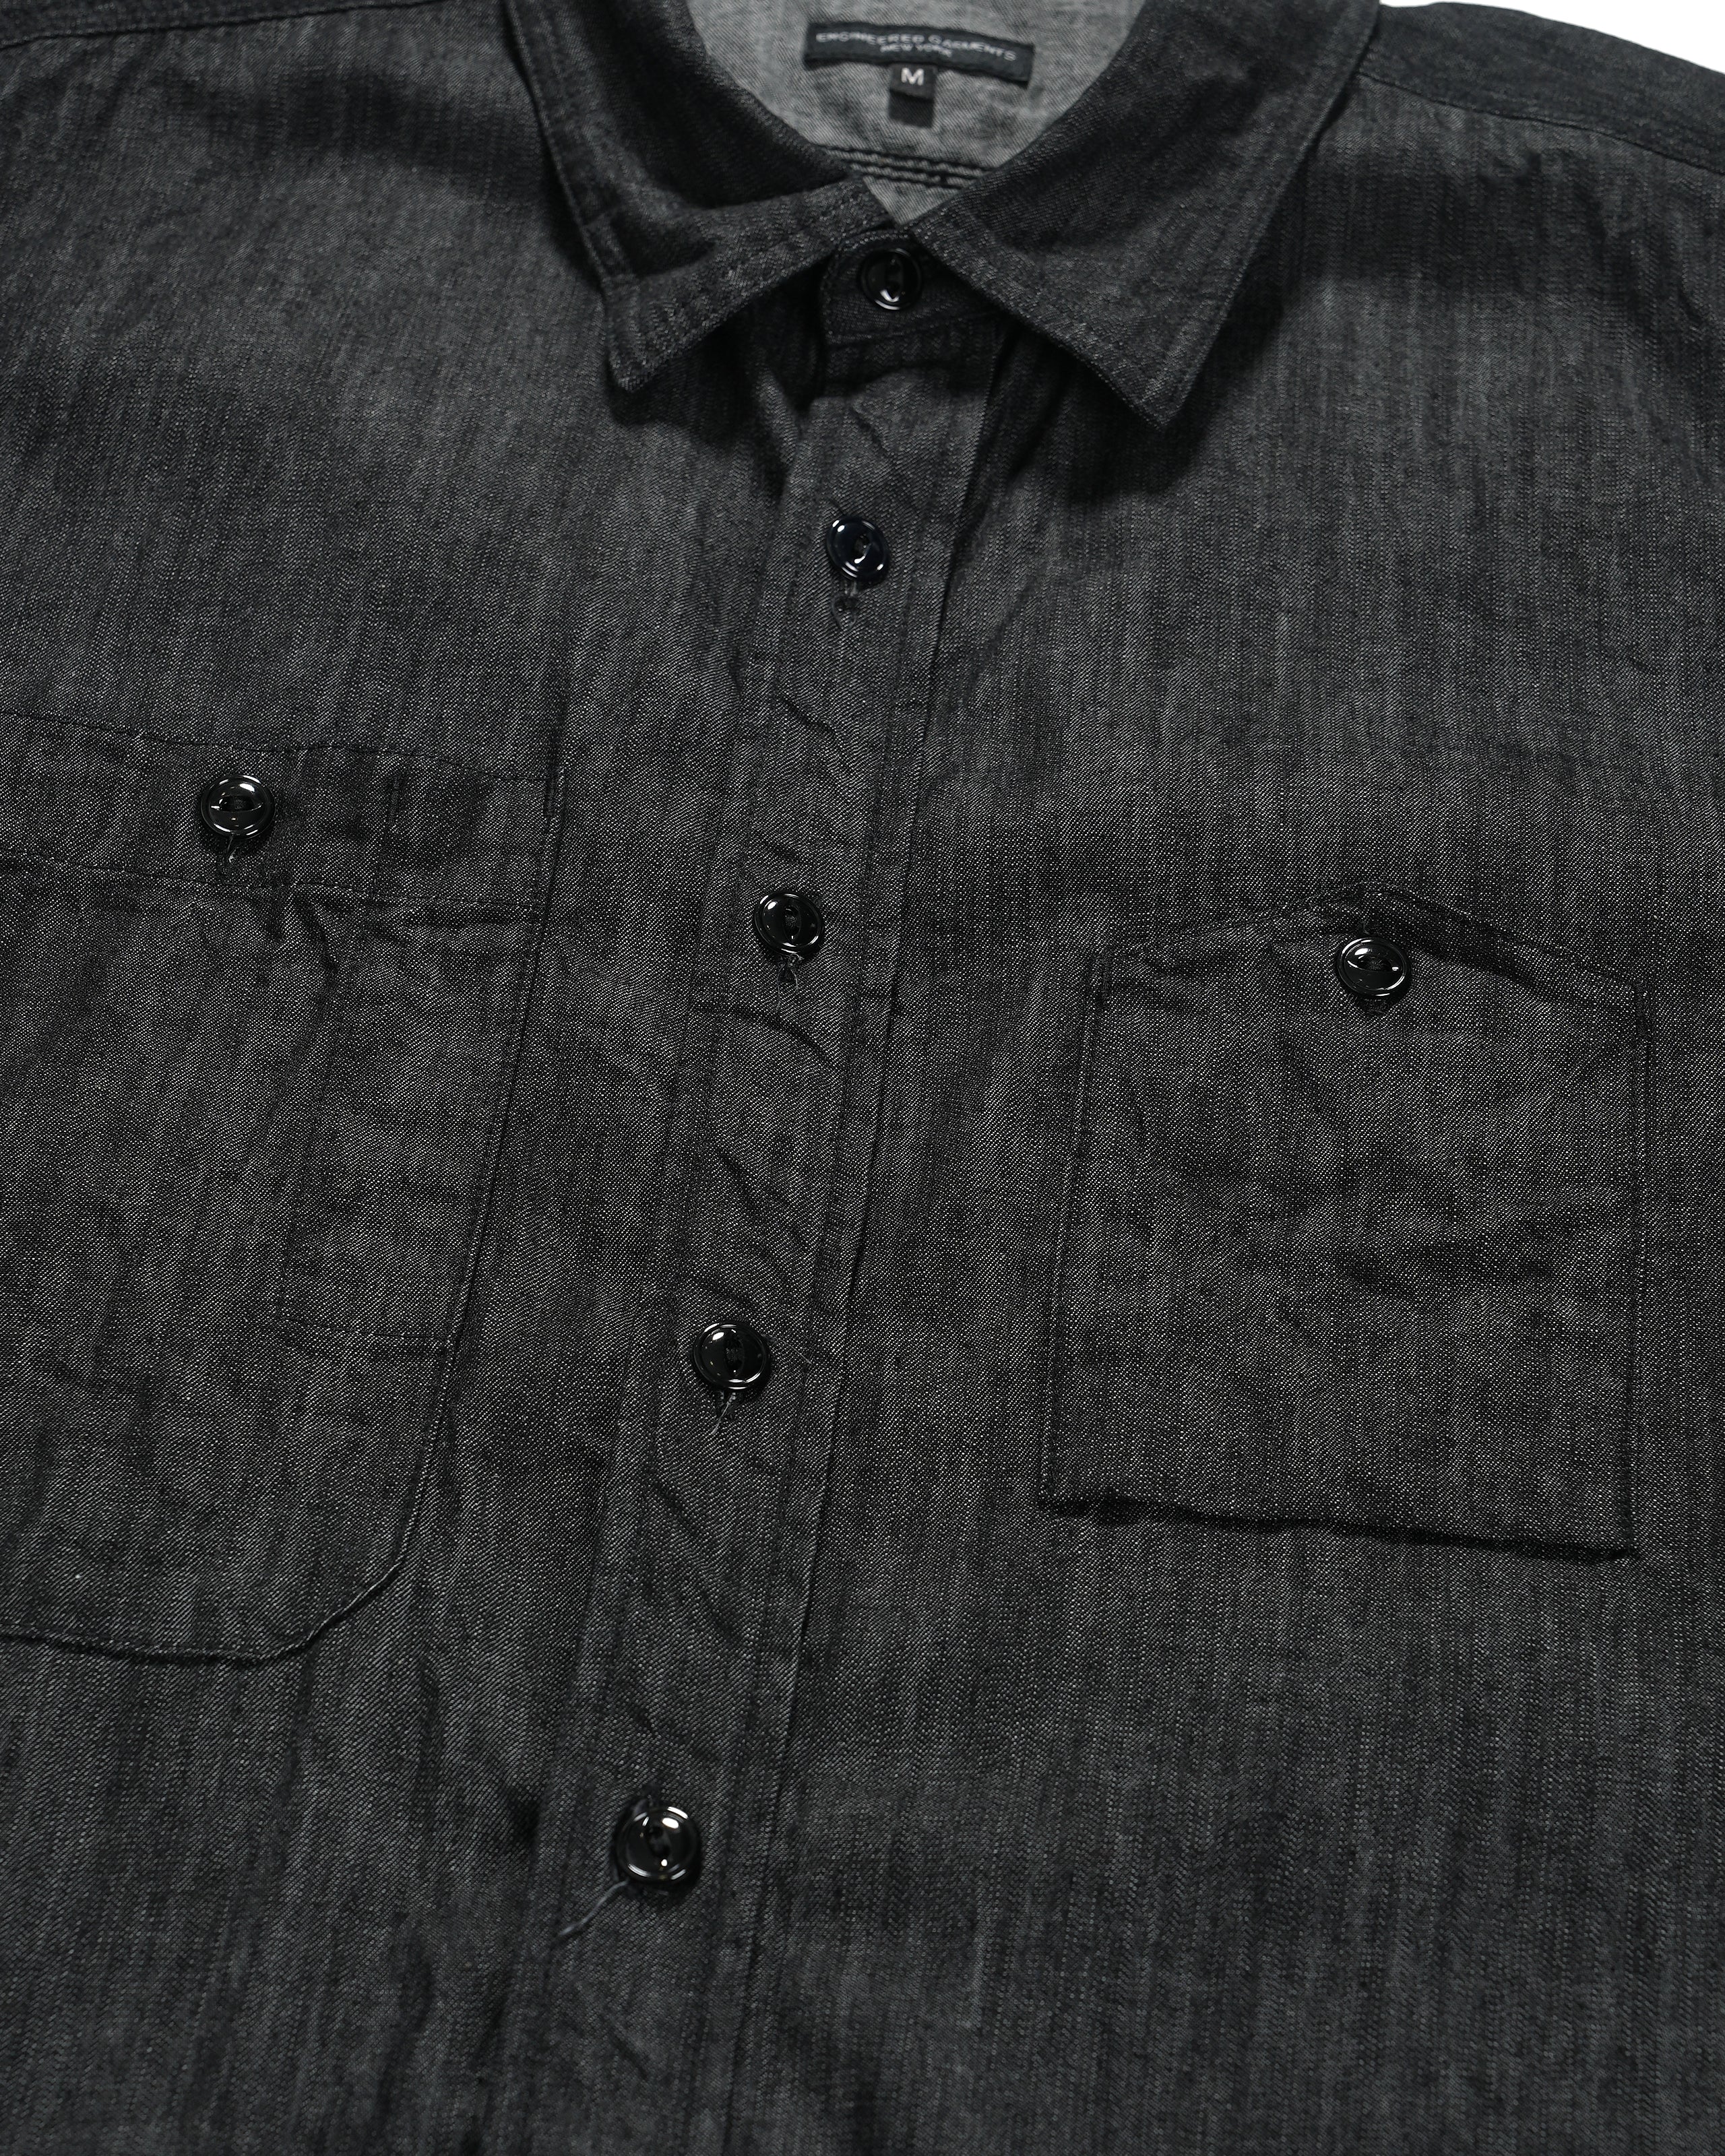 Work Shirt - Black Cotton Denim Shirting